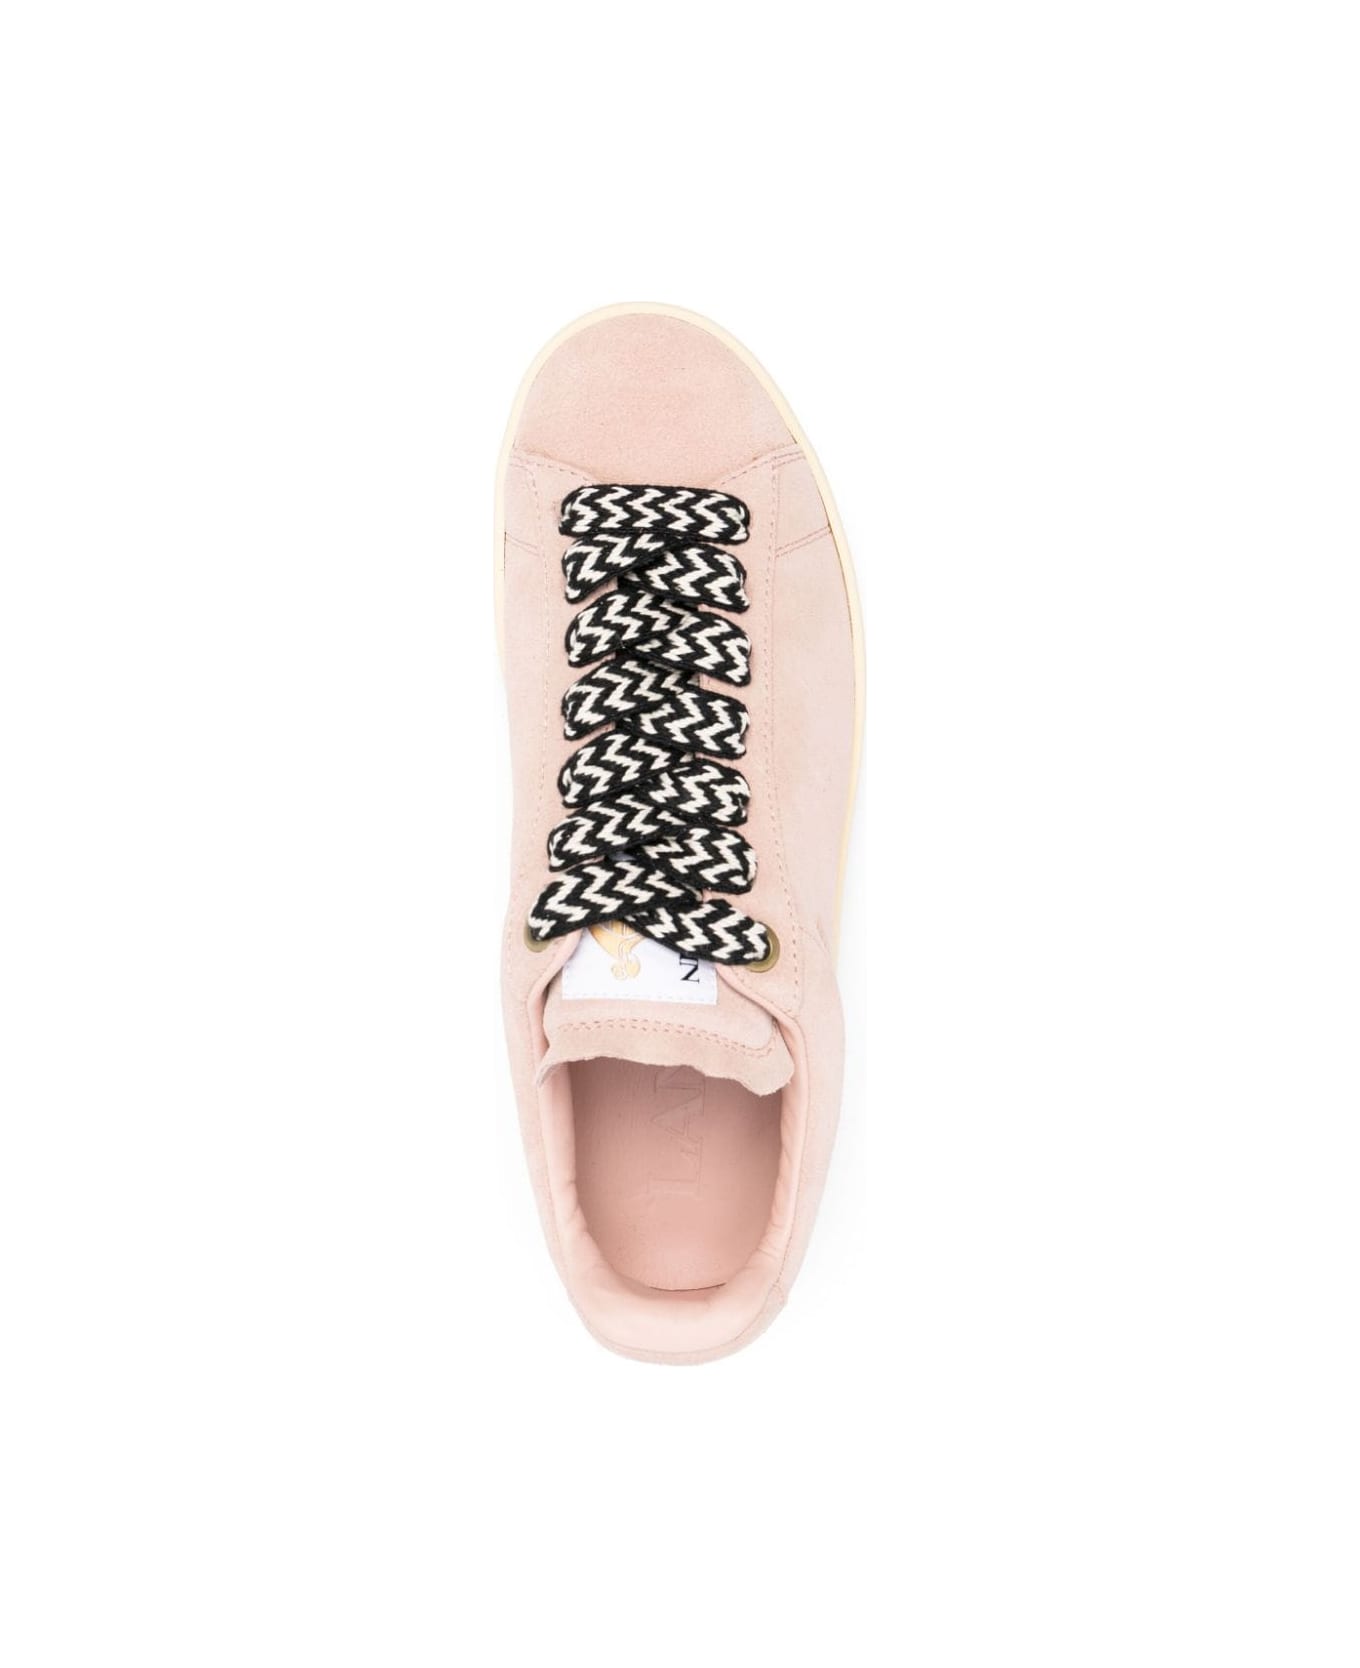 Lanvin Lite Curb Low Top Sneakers - Pale Pink スニーカー